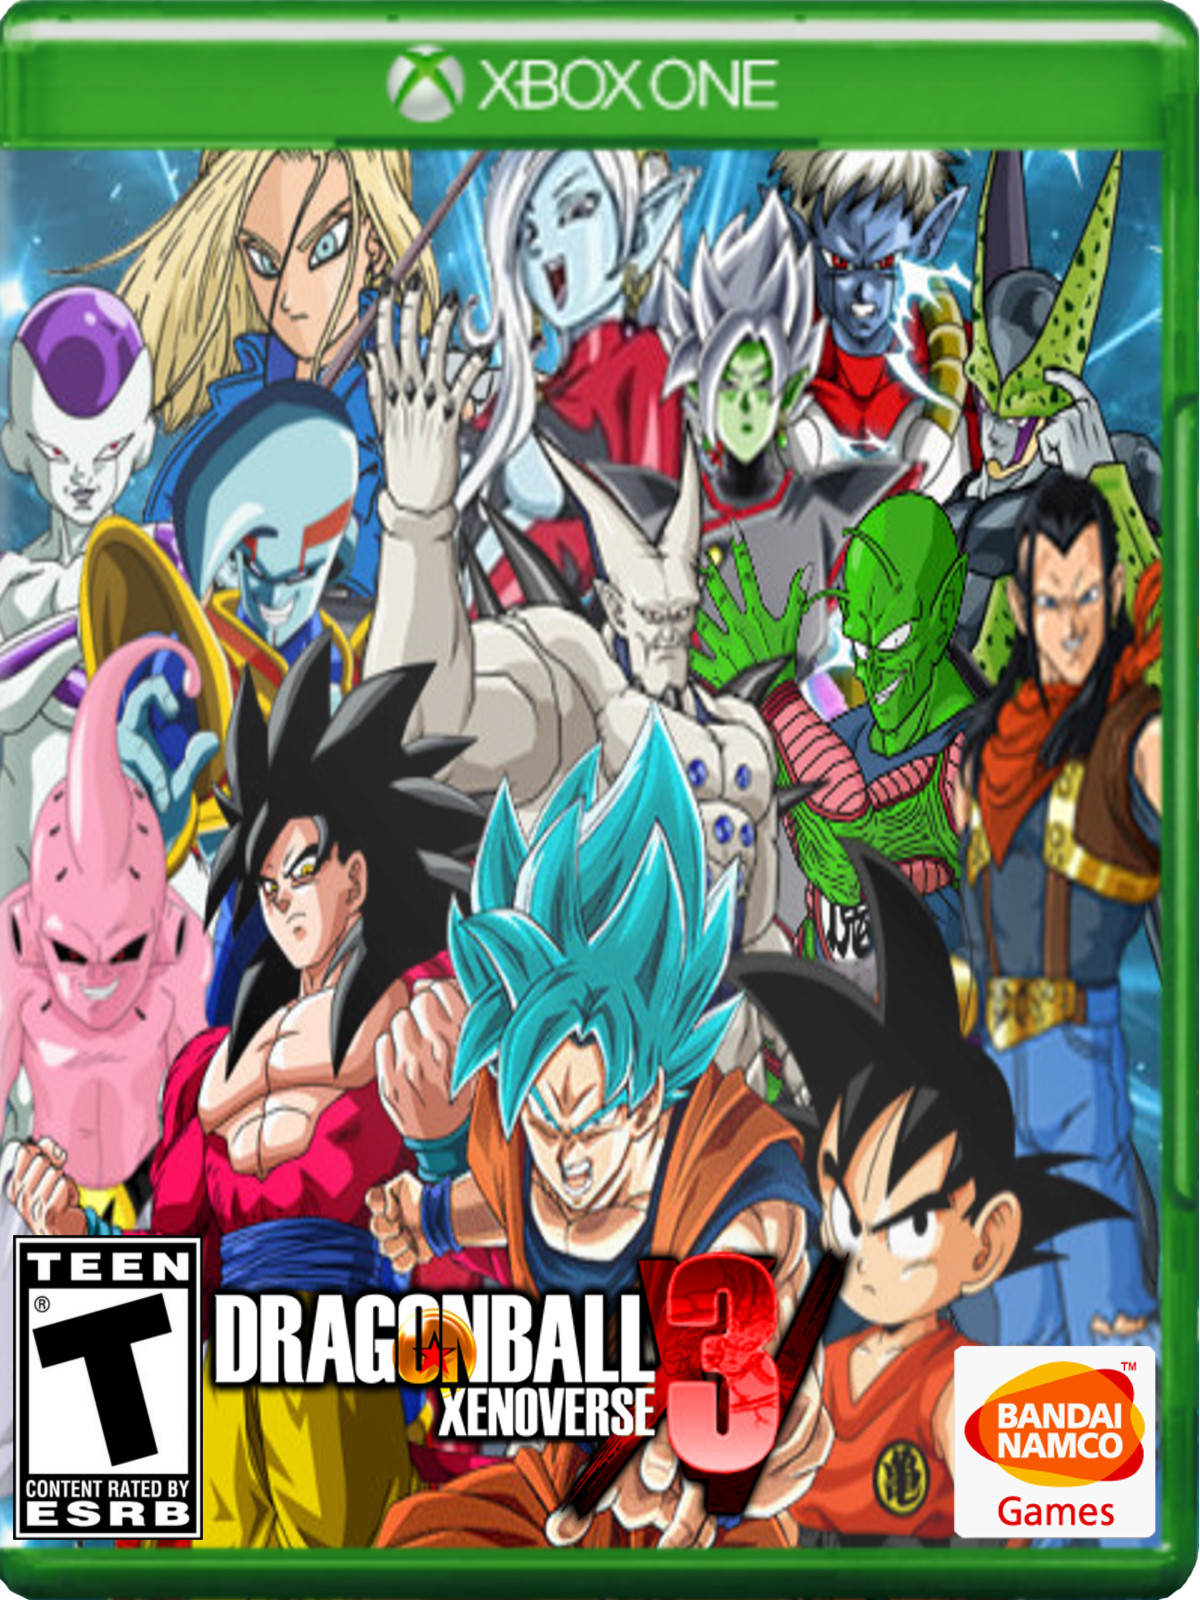 Dragon Ball Xenoverse 3, Game Ideas Wiki